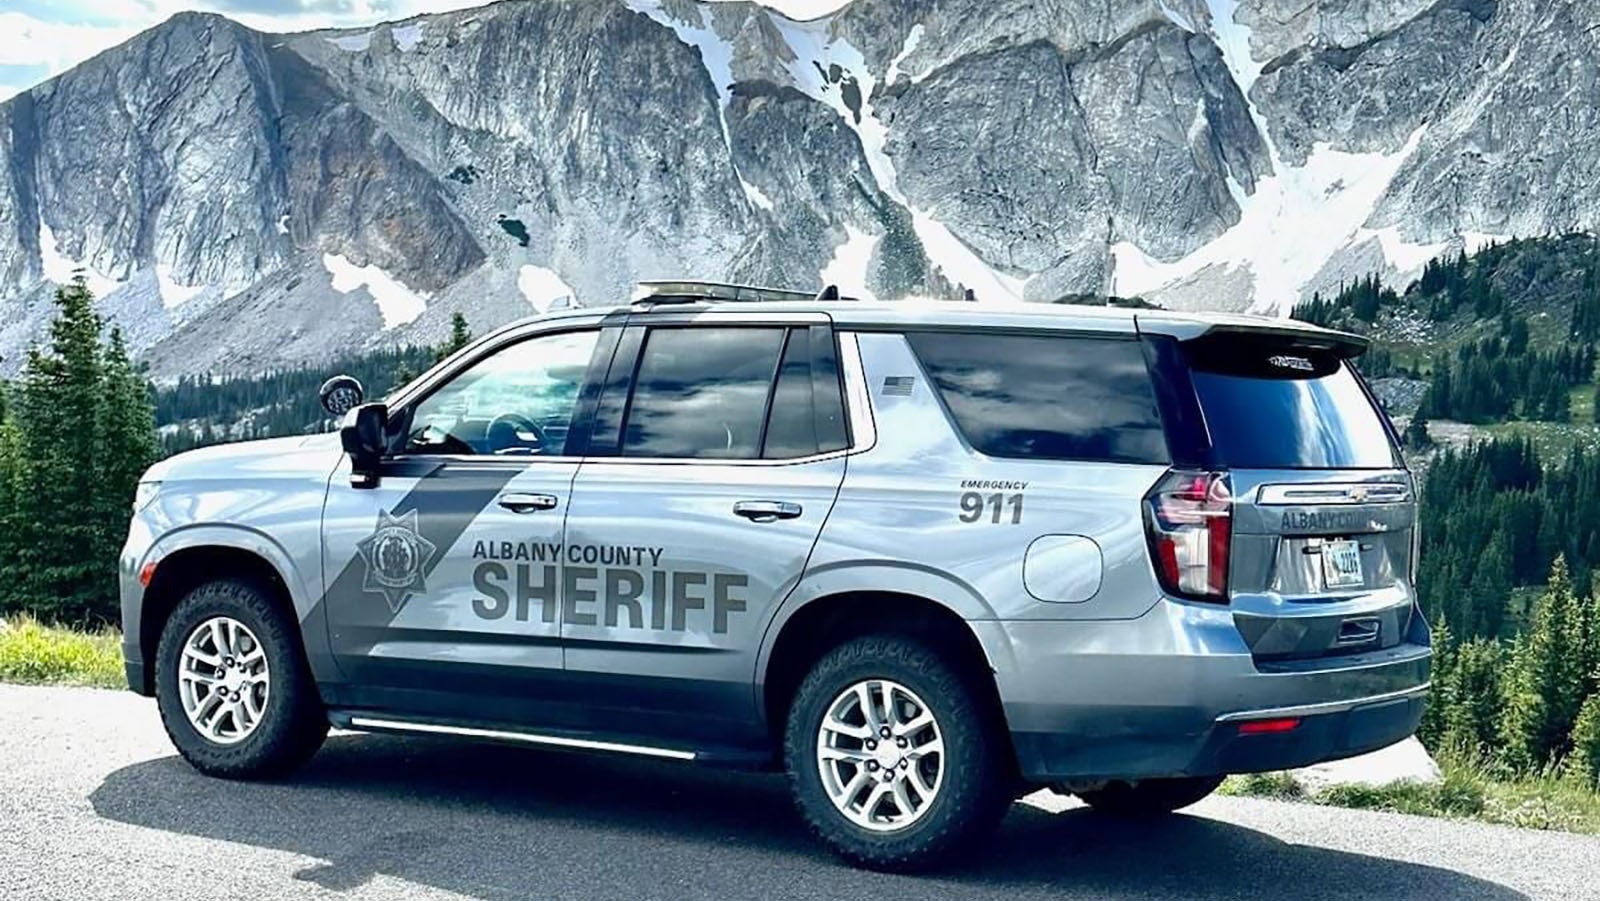 Albany County Sheriffs Office SUV 8 1 23